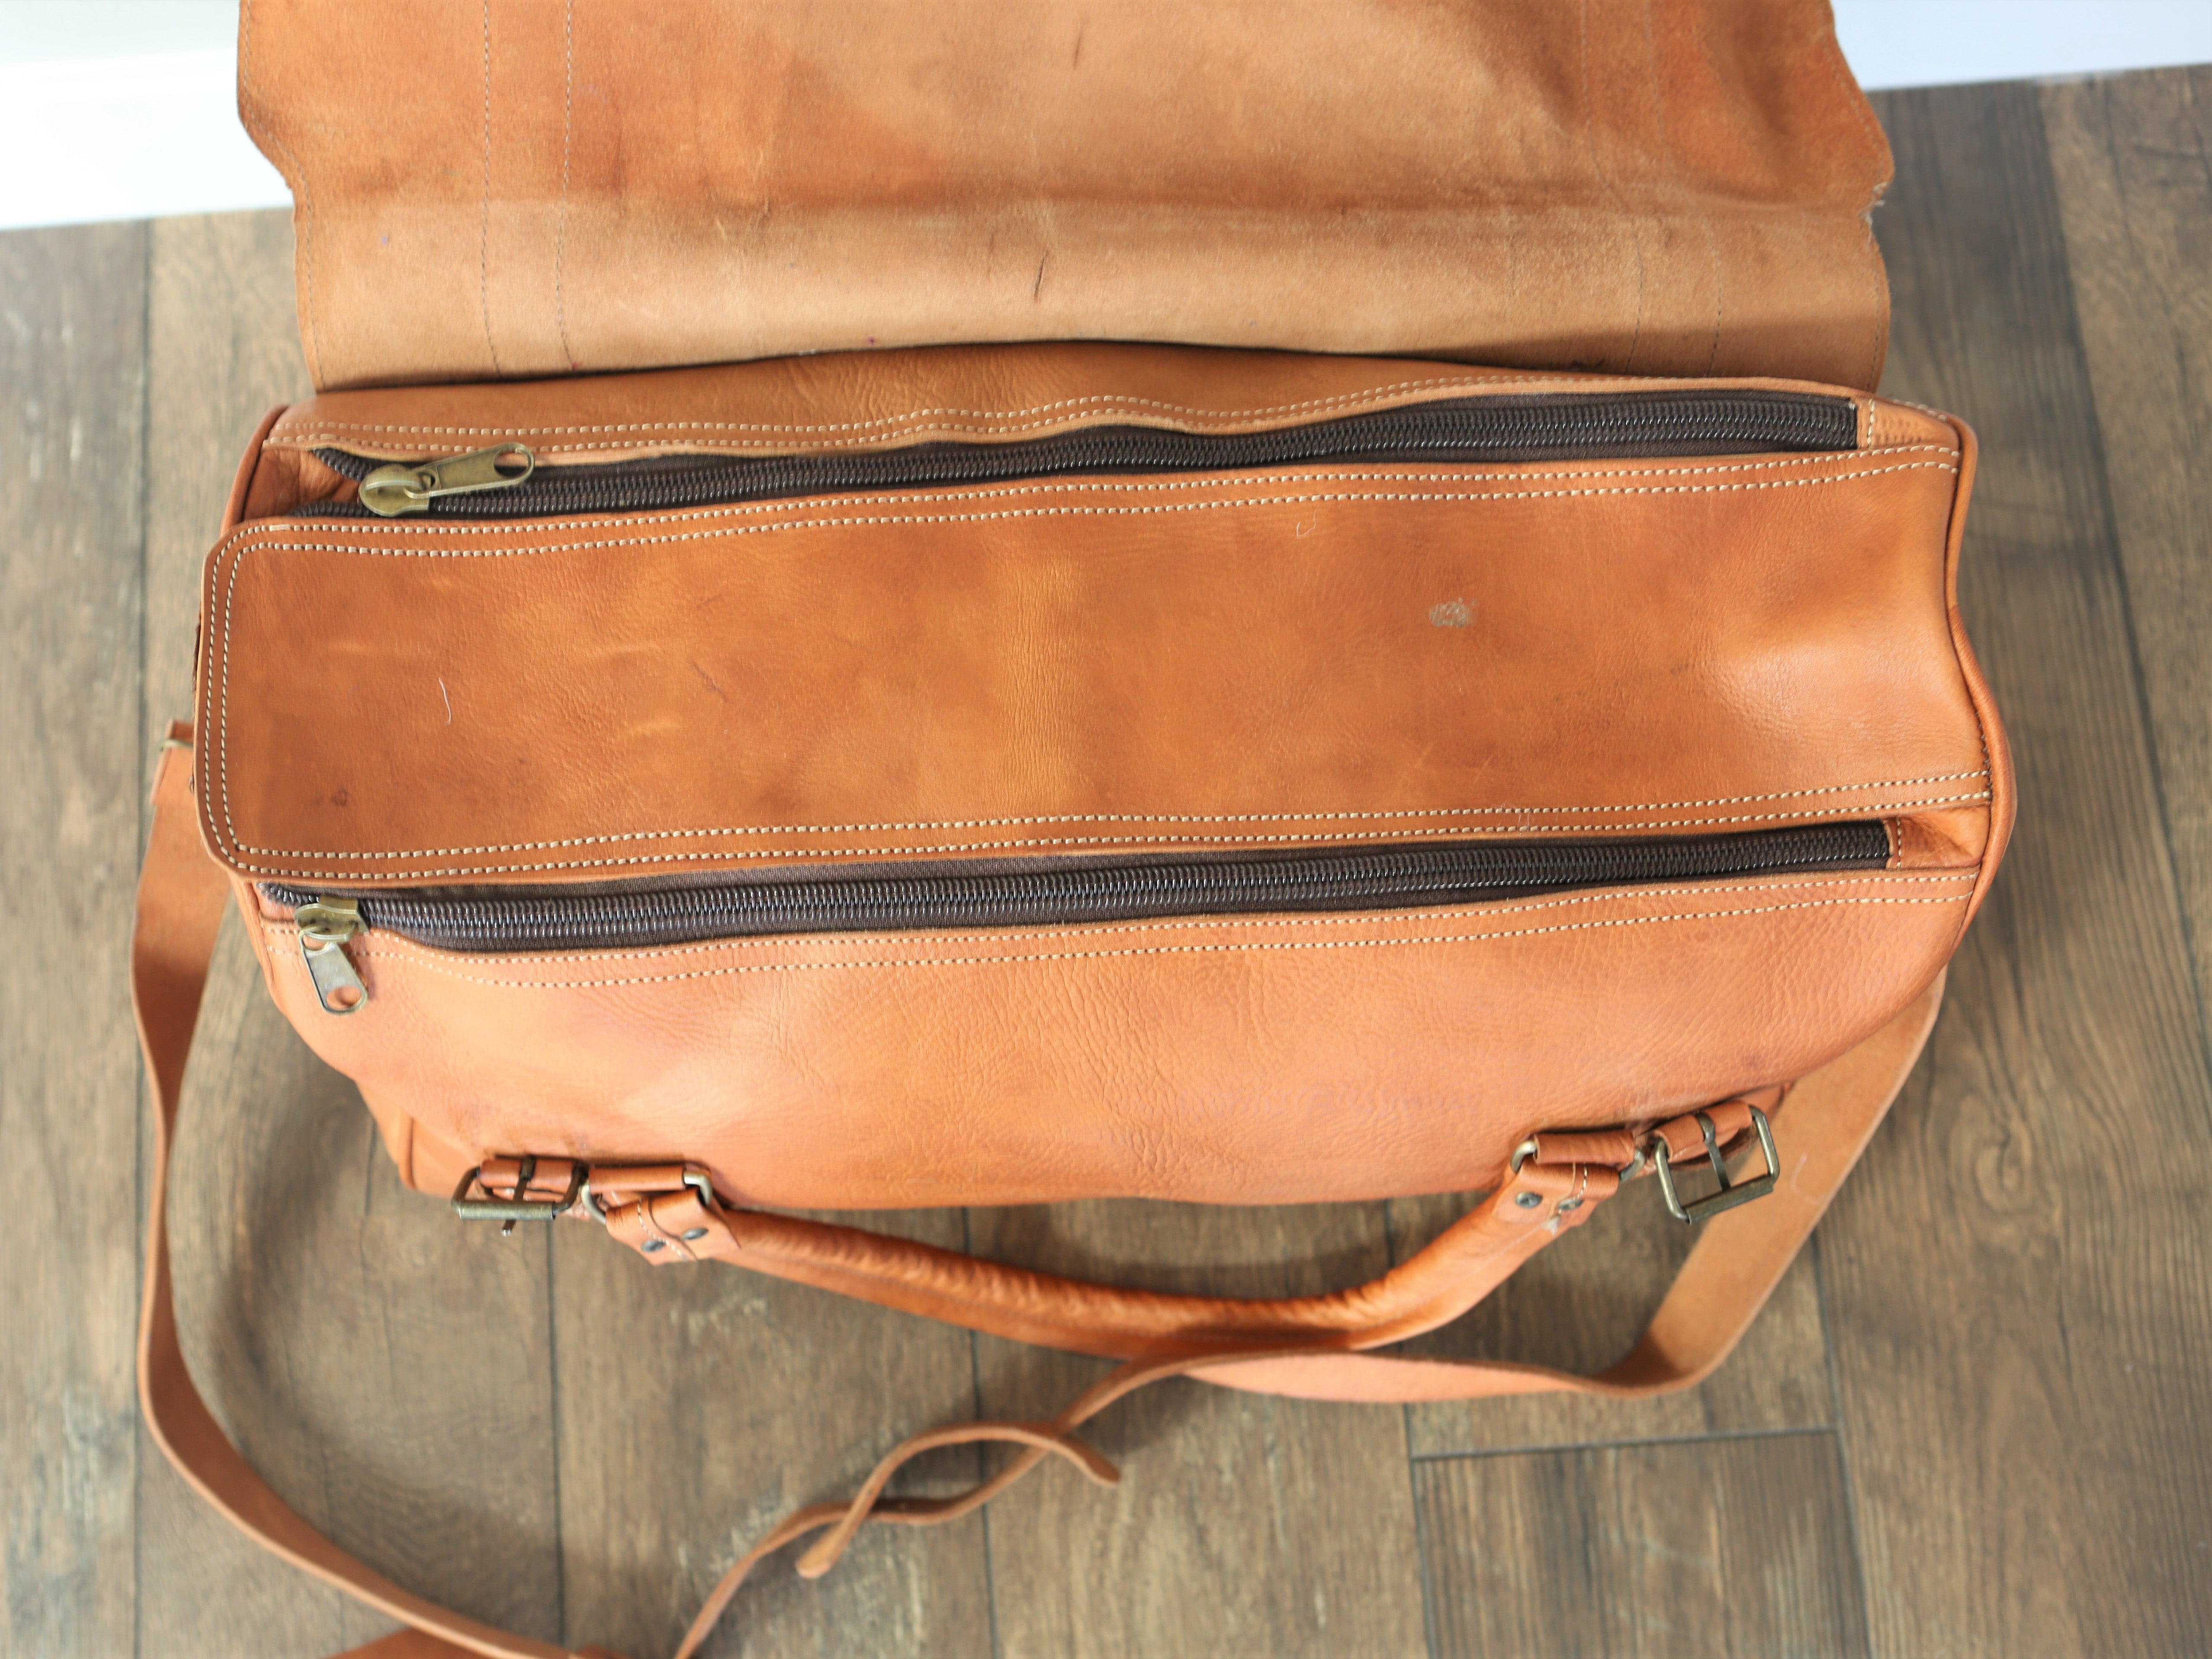 Handy leather duffle bag